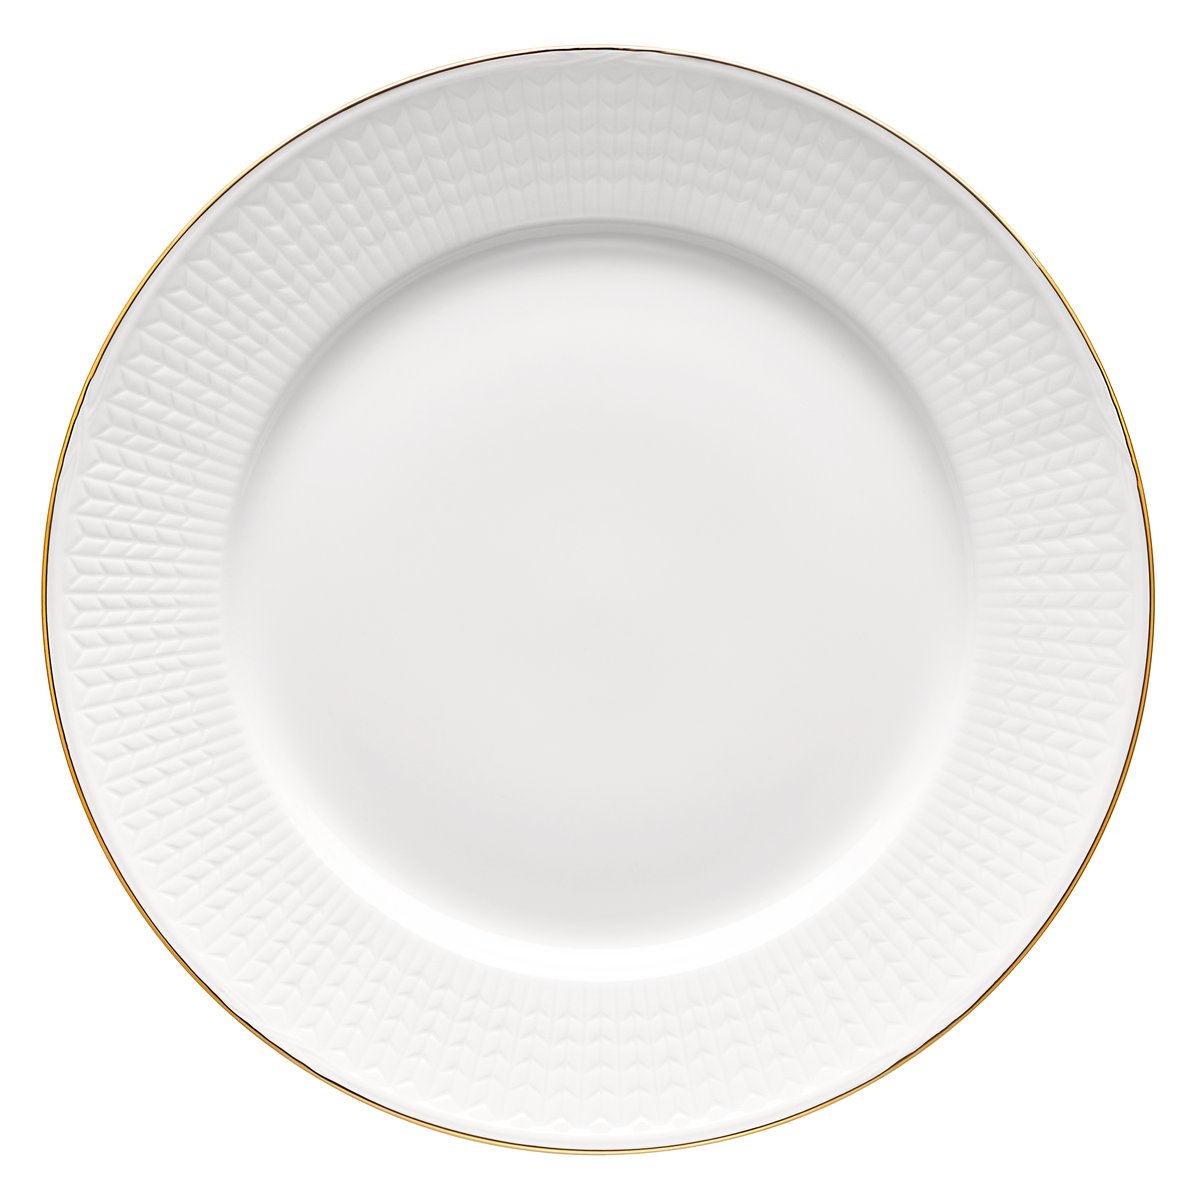 rörstrand assiette swedish grace gala ø27cm blanc